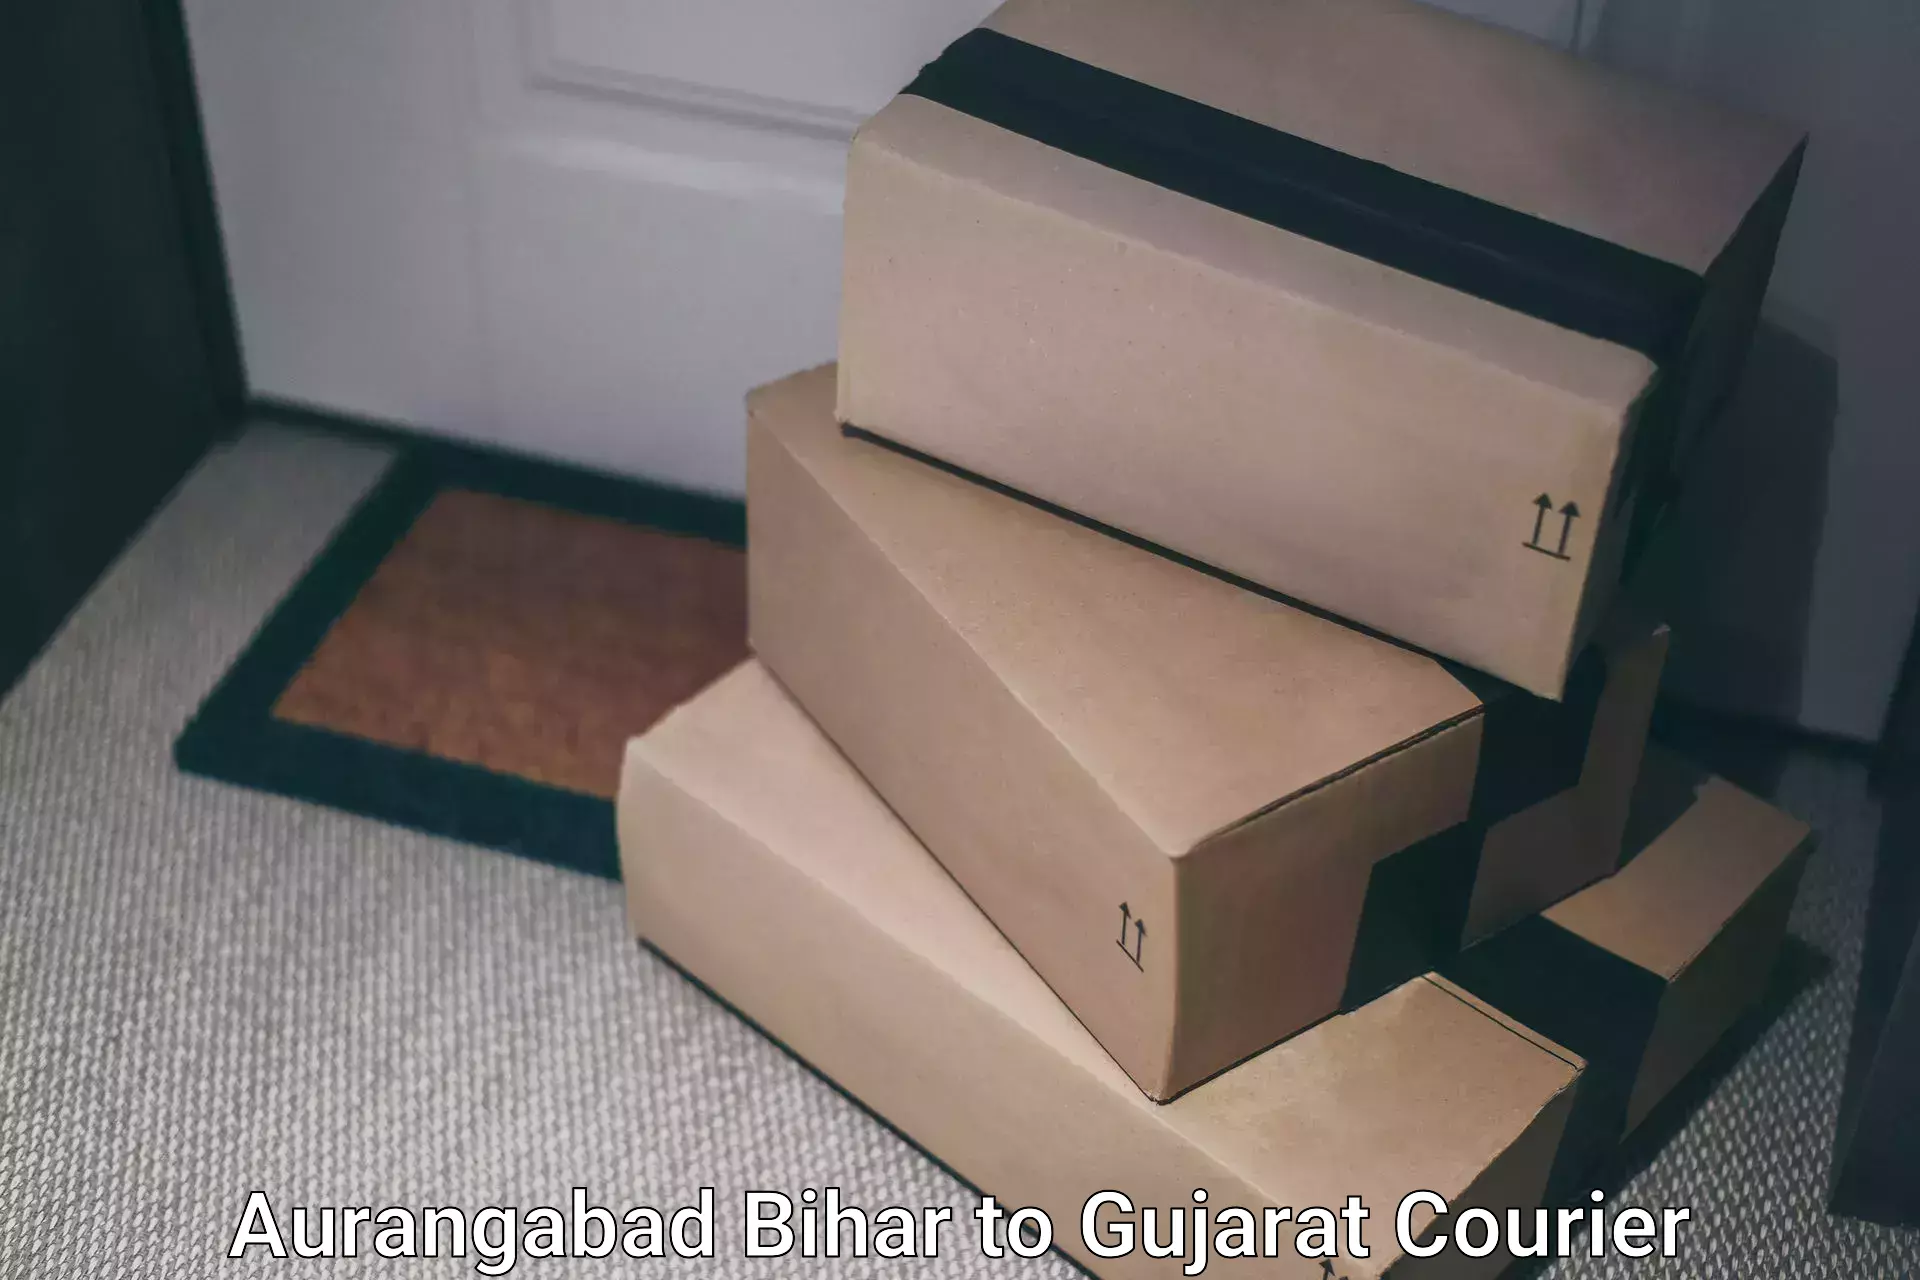 Cross-border shipping Aurangabad Bihar to Bopal